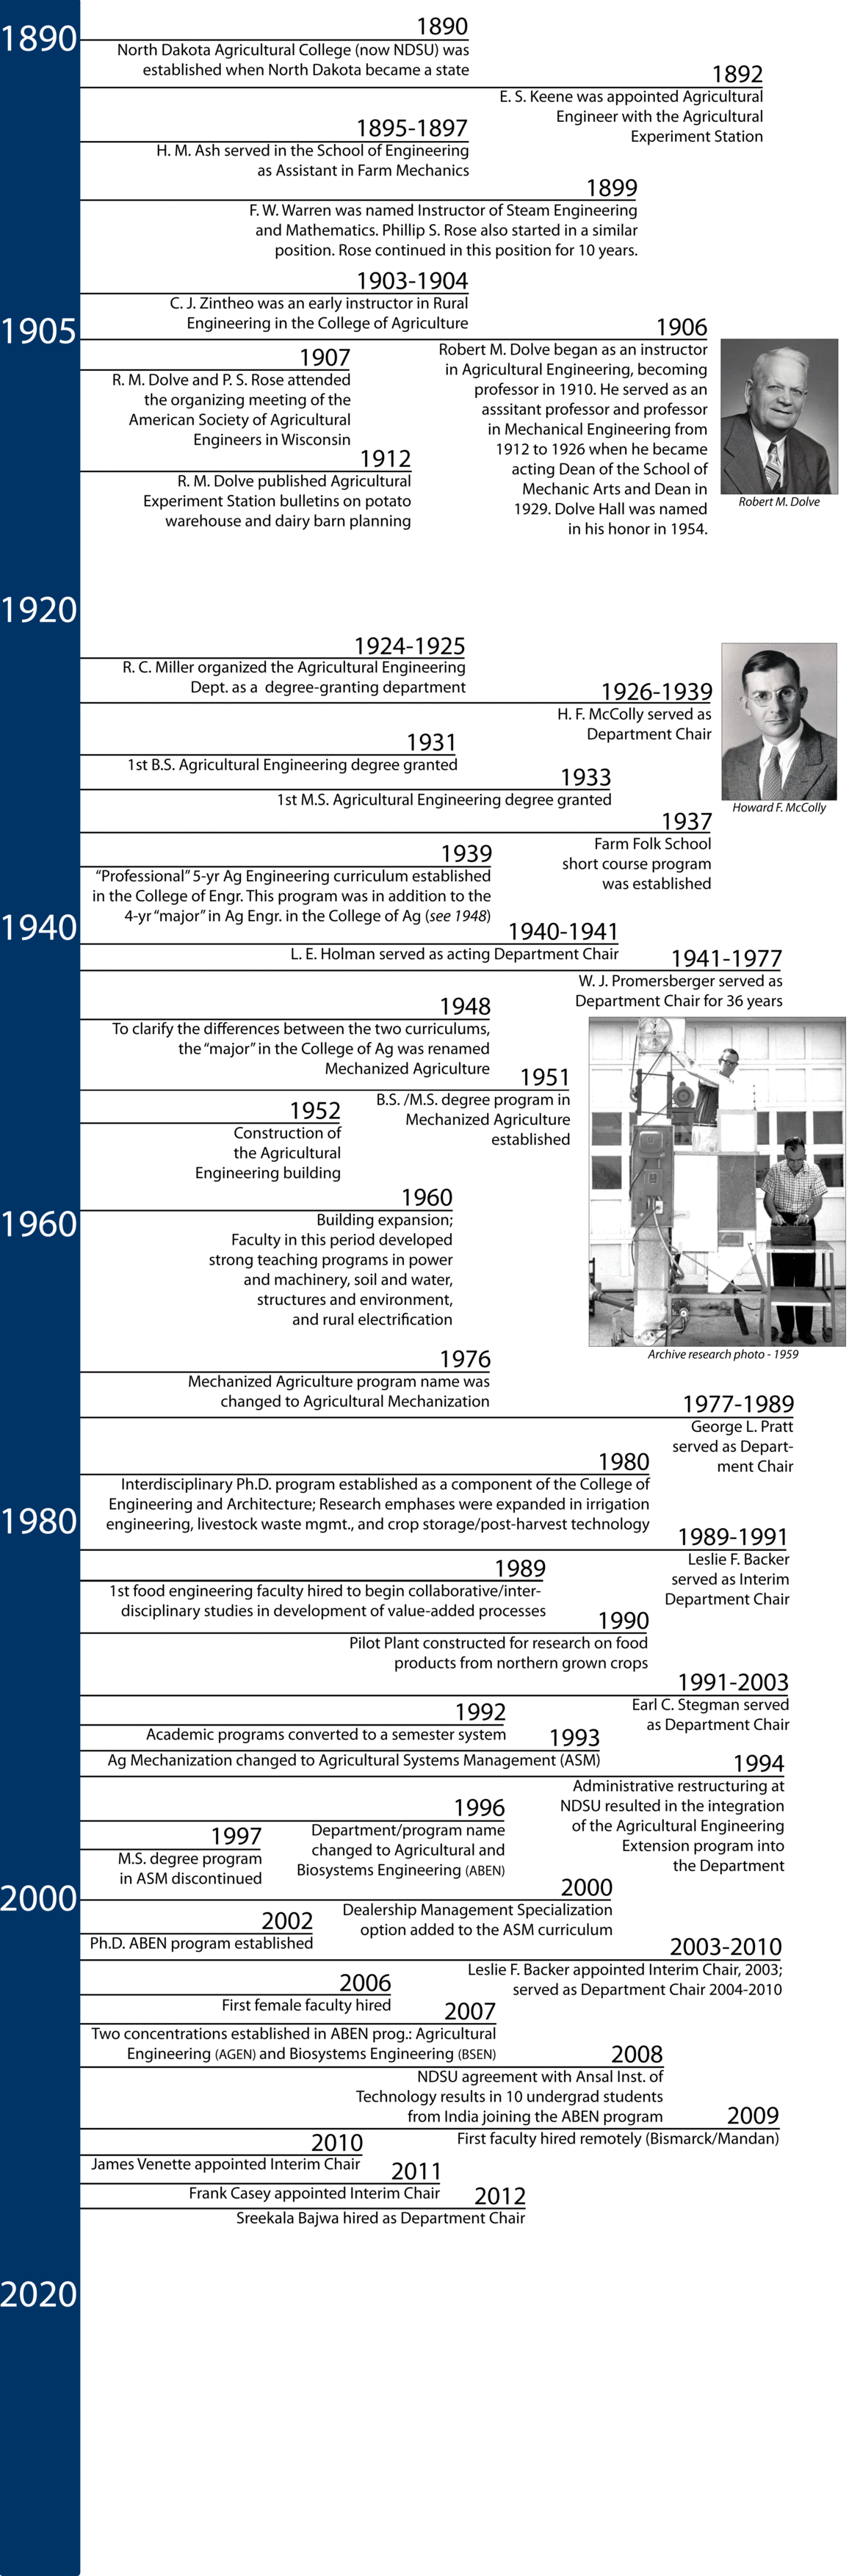 Department history timeline